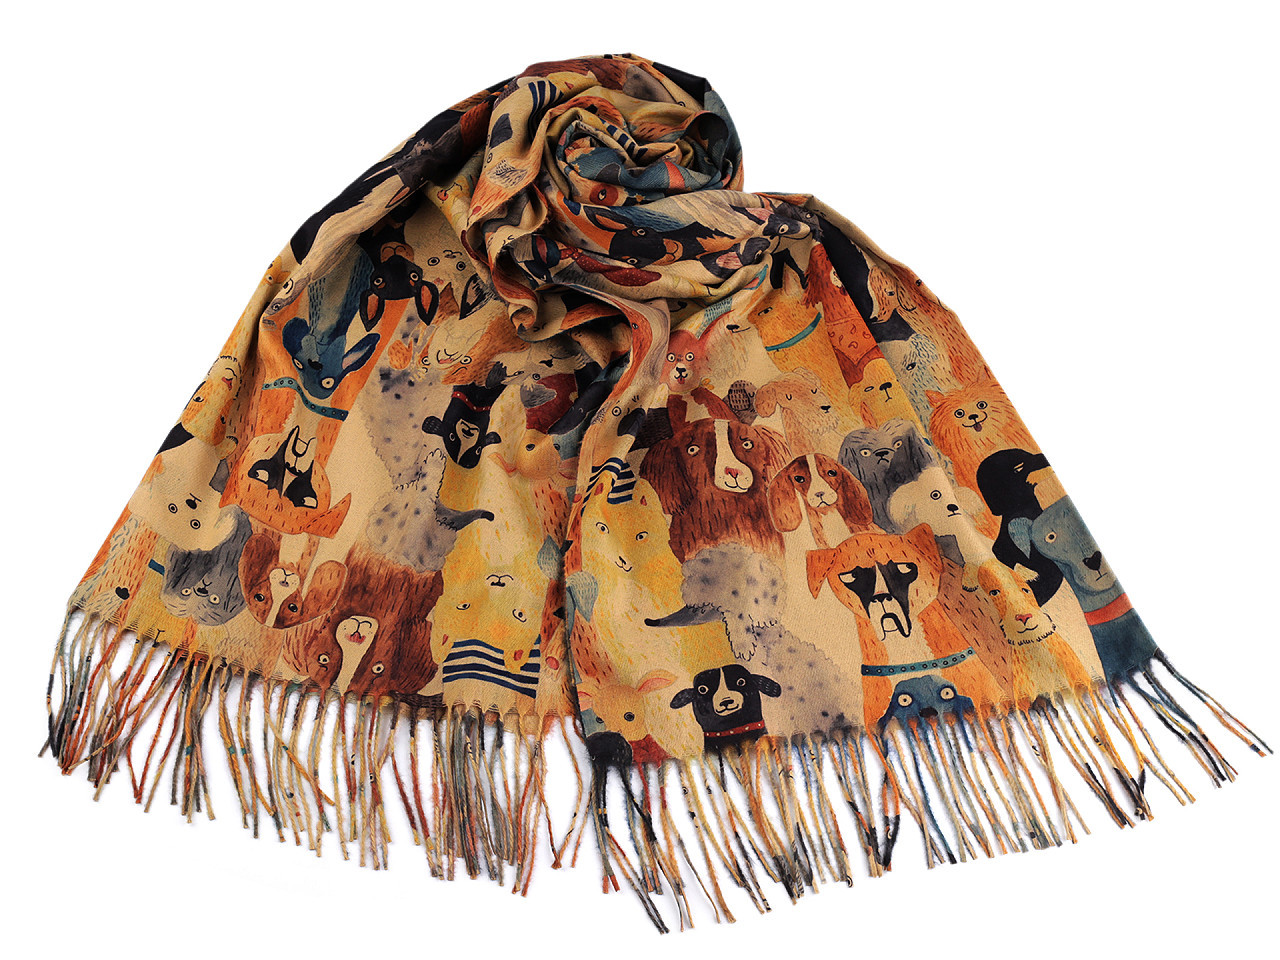 Šátek / šála typu kašmír s třásněmi, psi 70x180 cm, barva 10 béžová tm.